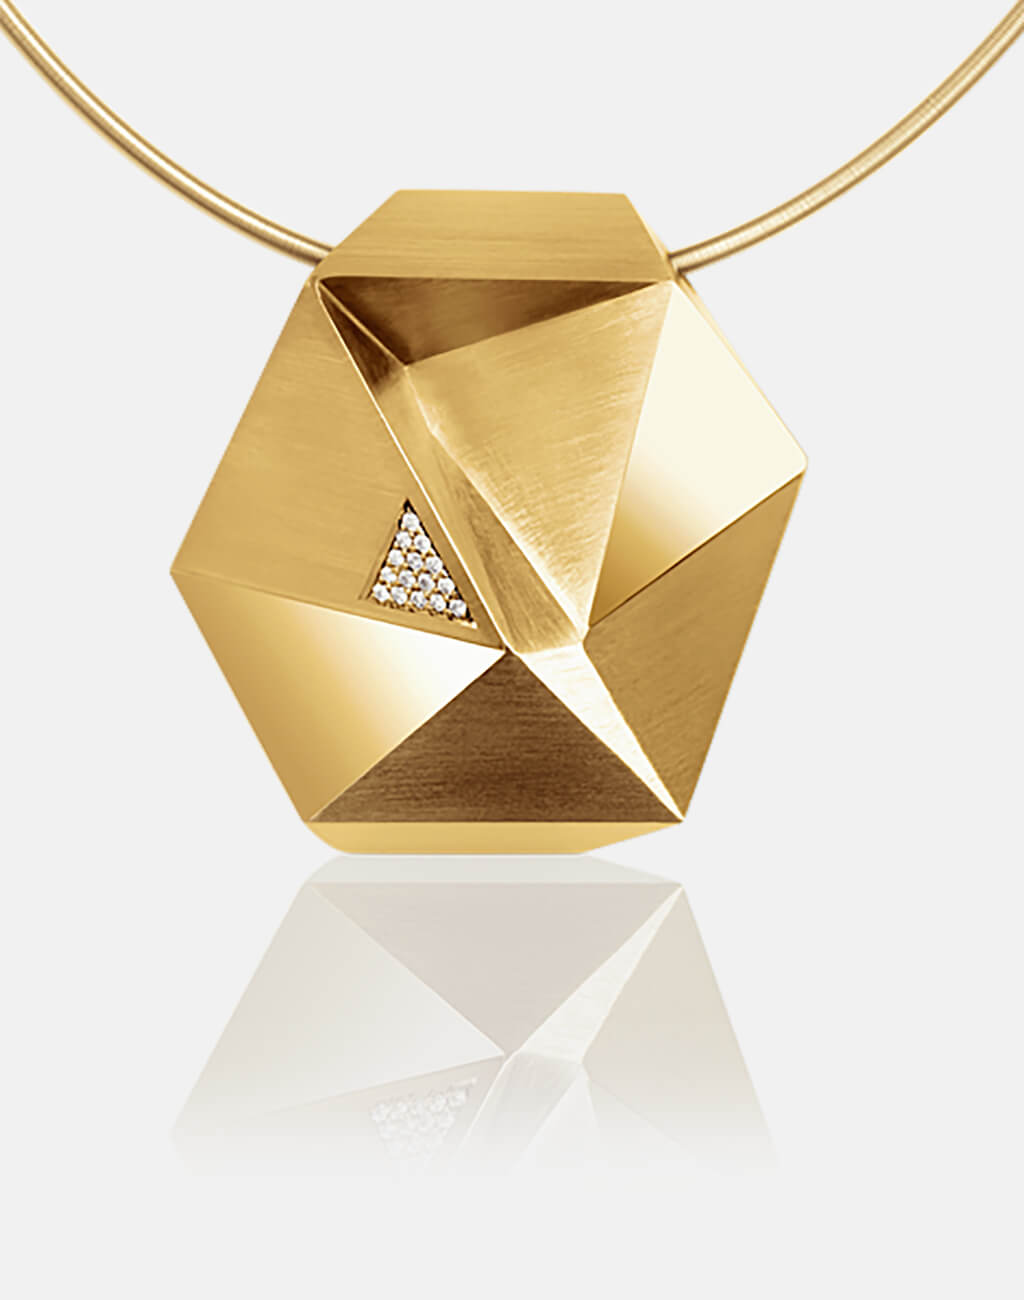 Tectone | Collier, Kettenanhänger, Kette 750/- Gelbgold, Brillanten, Diamanten | necklace, pendant 18kt yellow gold, diamonds | SYNO-Schmuck.com